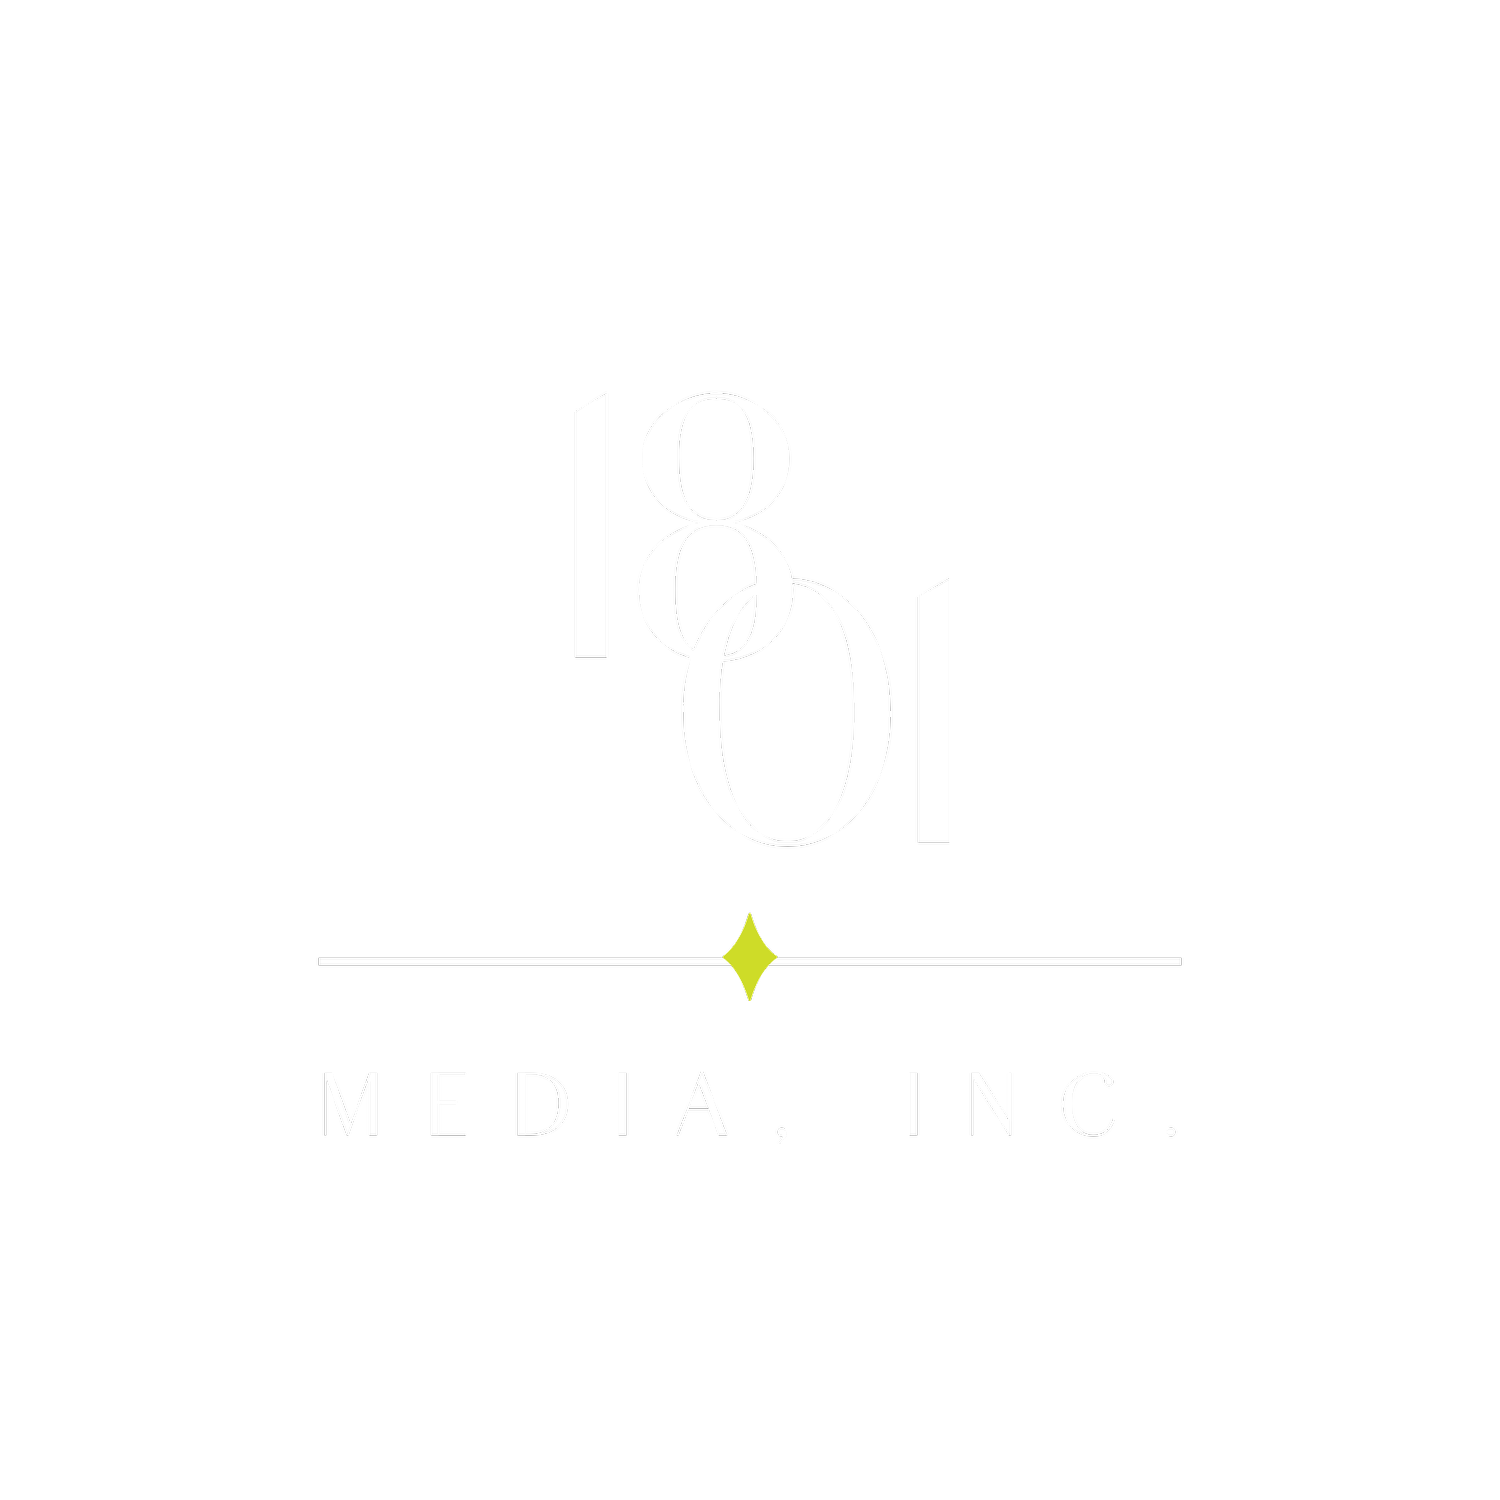 1801 Media, Inc.